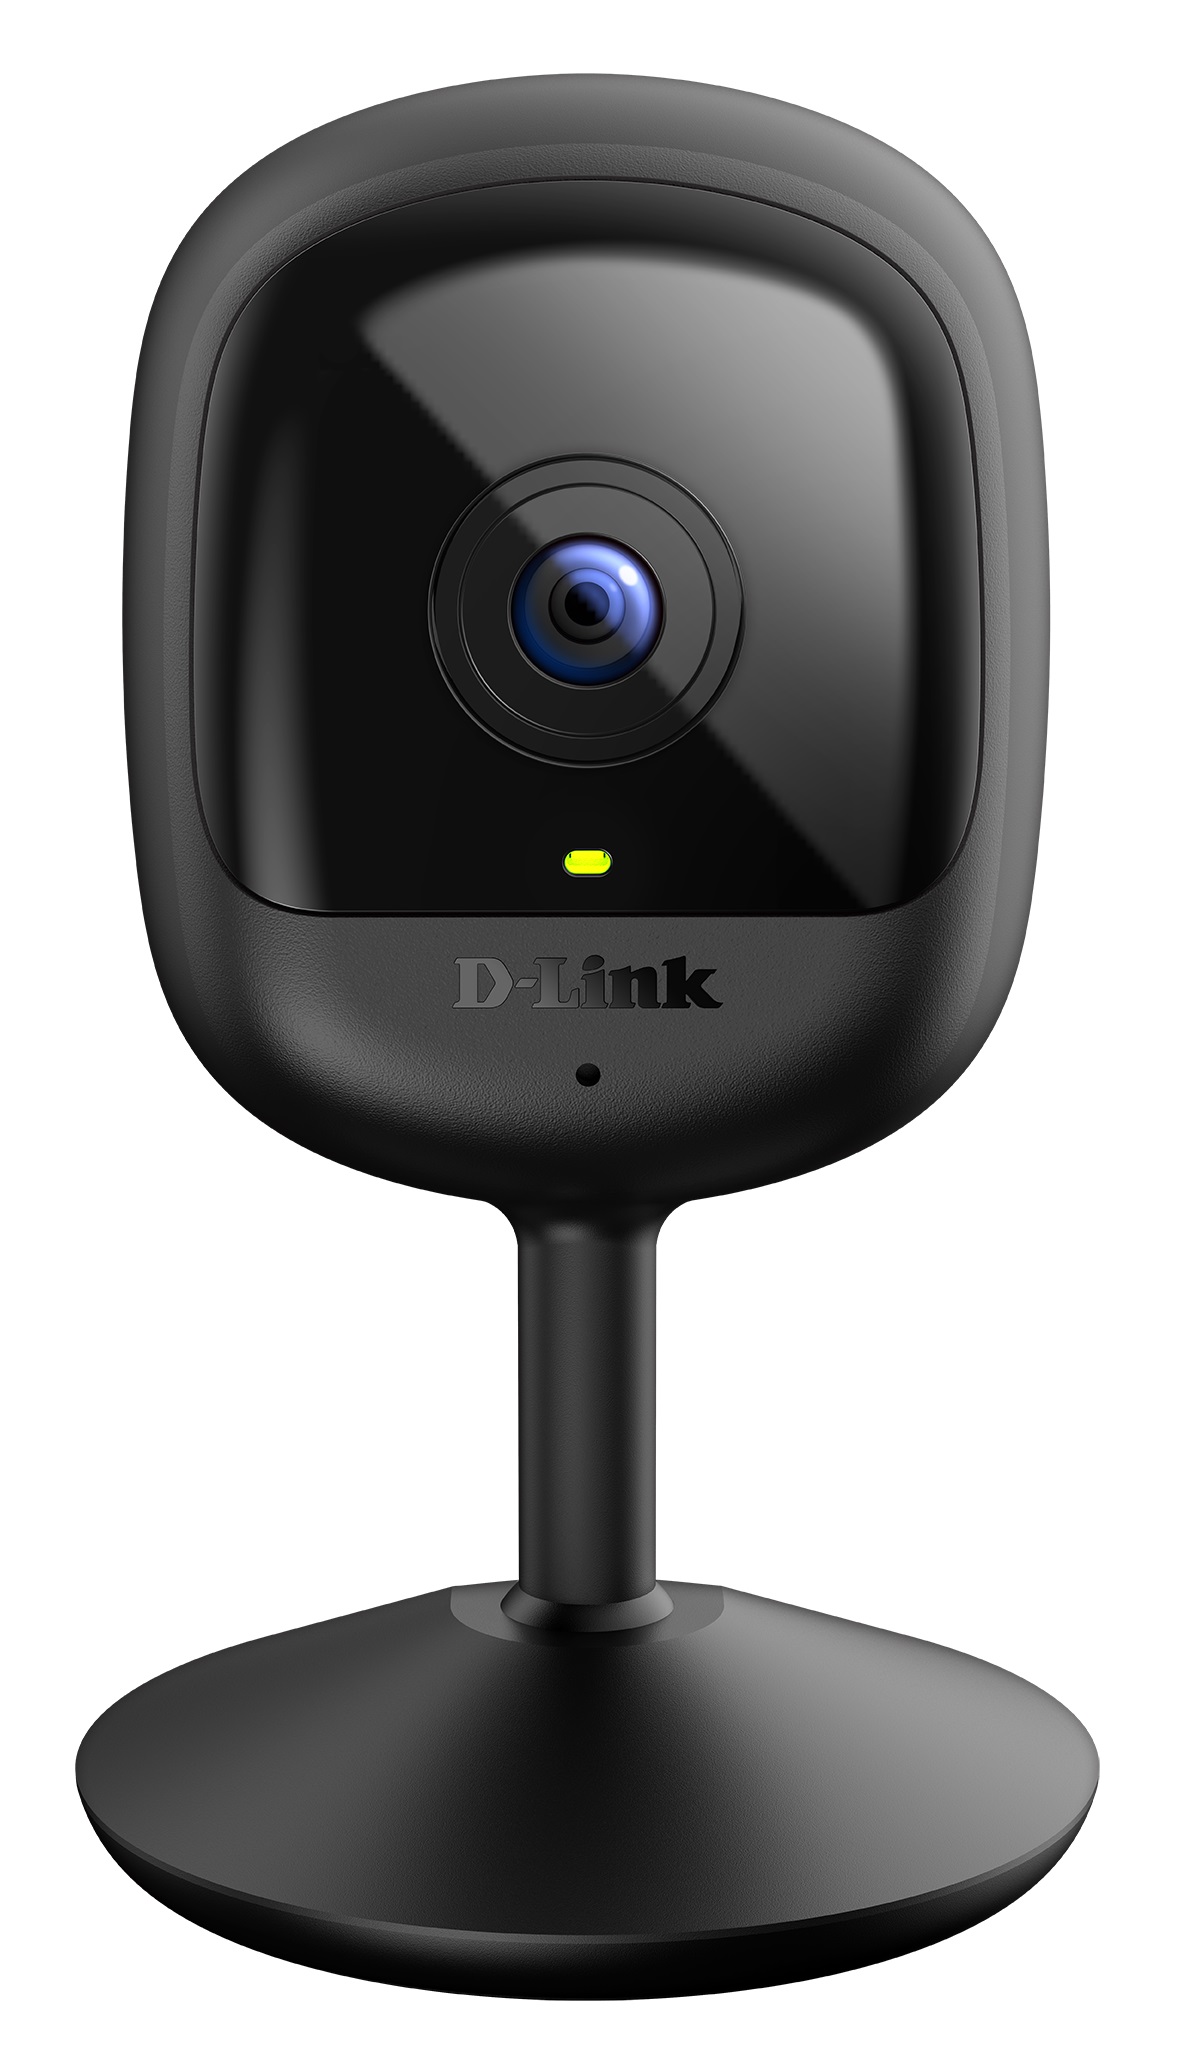 D-Link DCS-6100LHV2/E - Compact Full HD Wi-Fi Camera